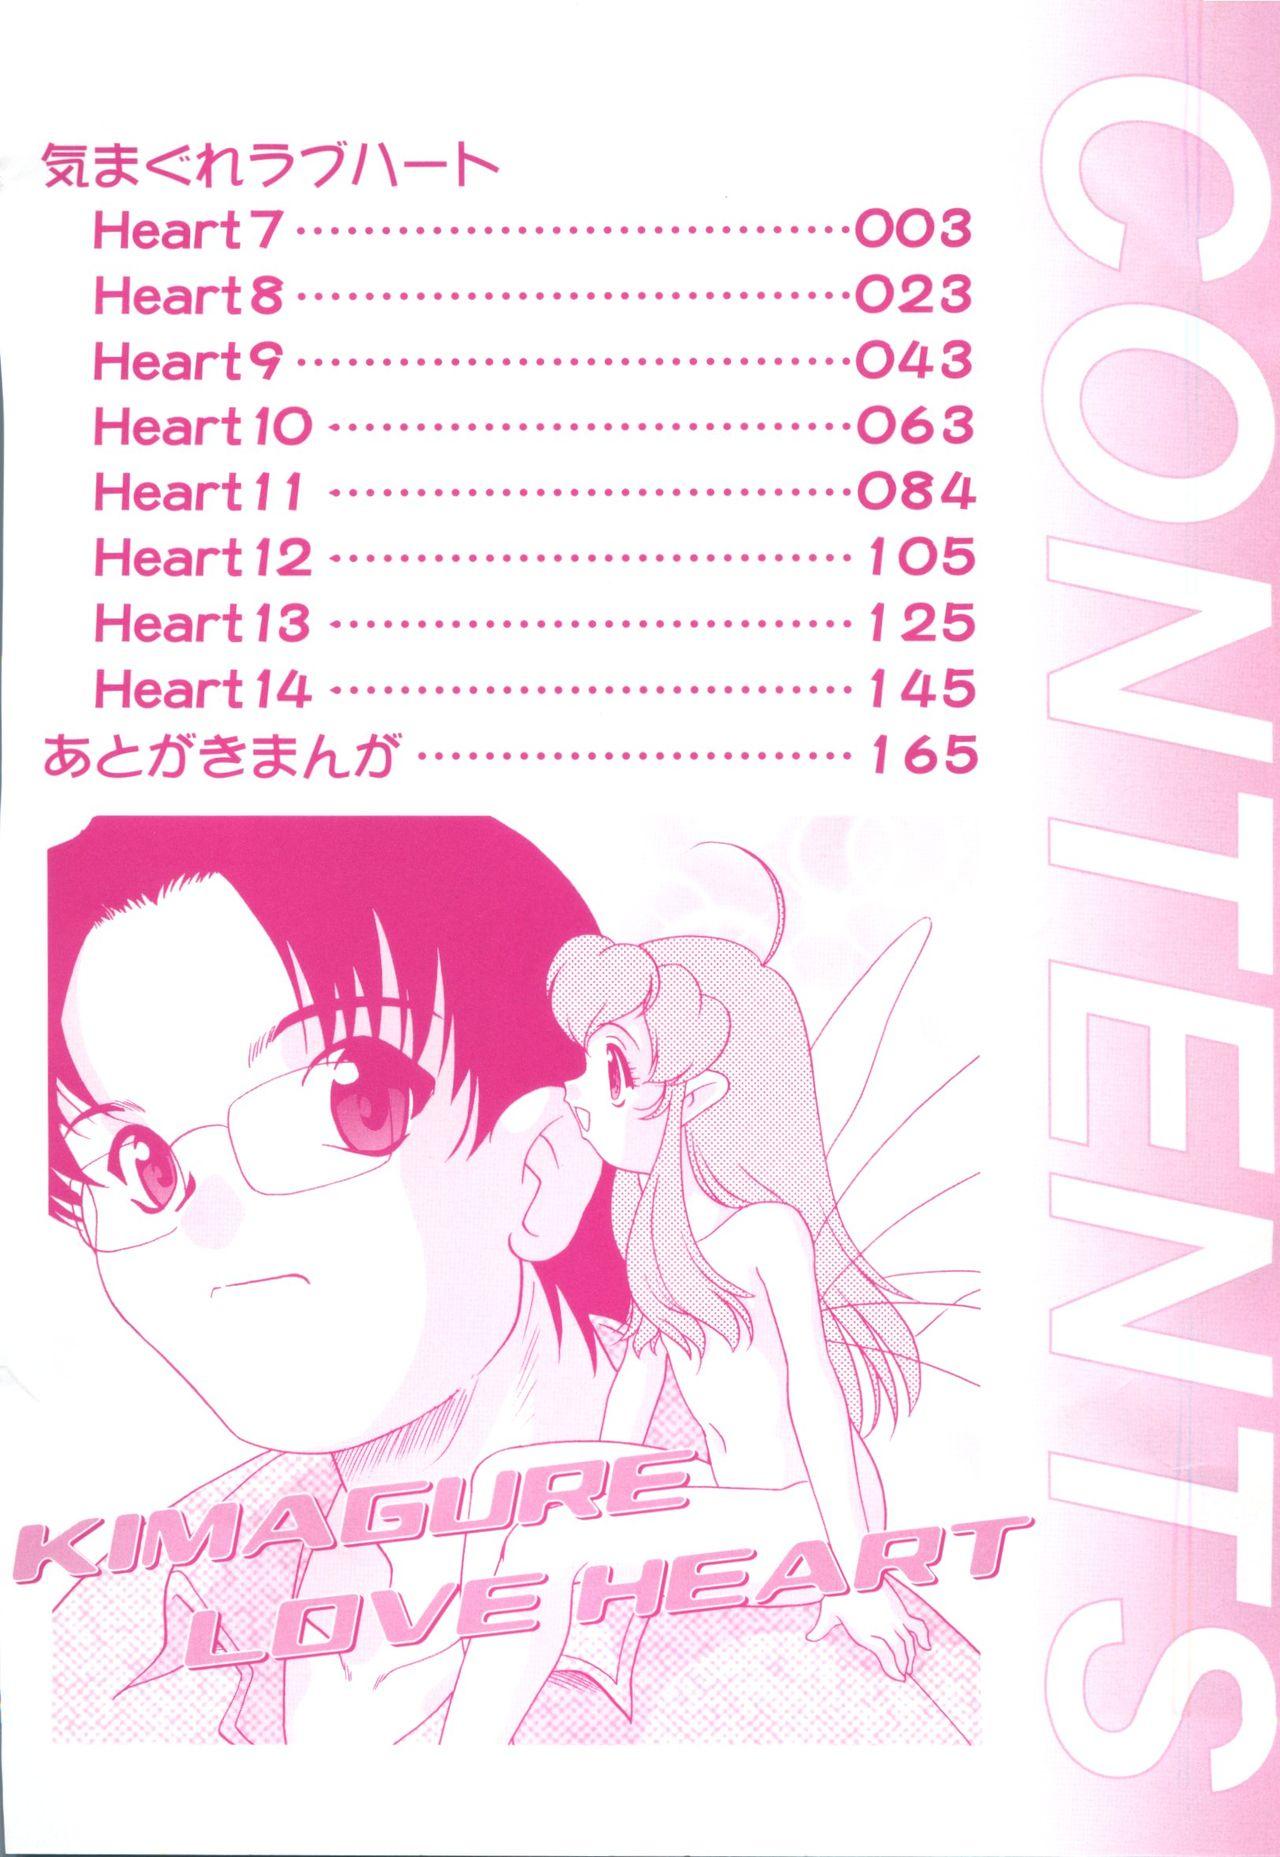 Kimagure Love Heart 2 5